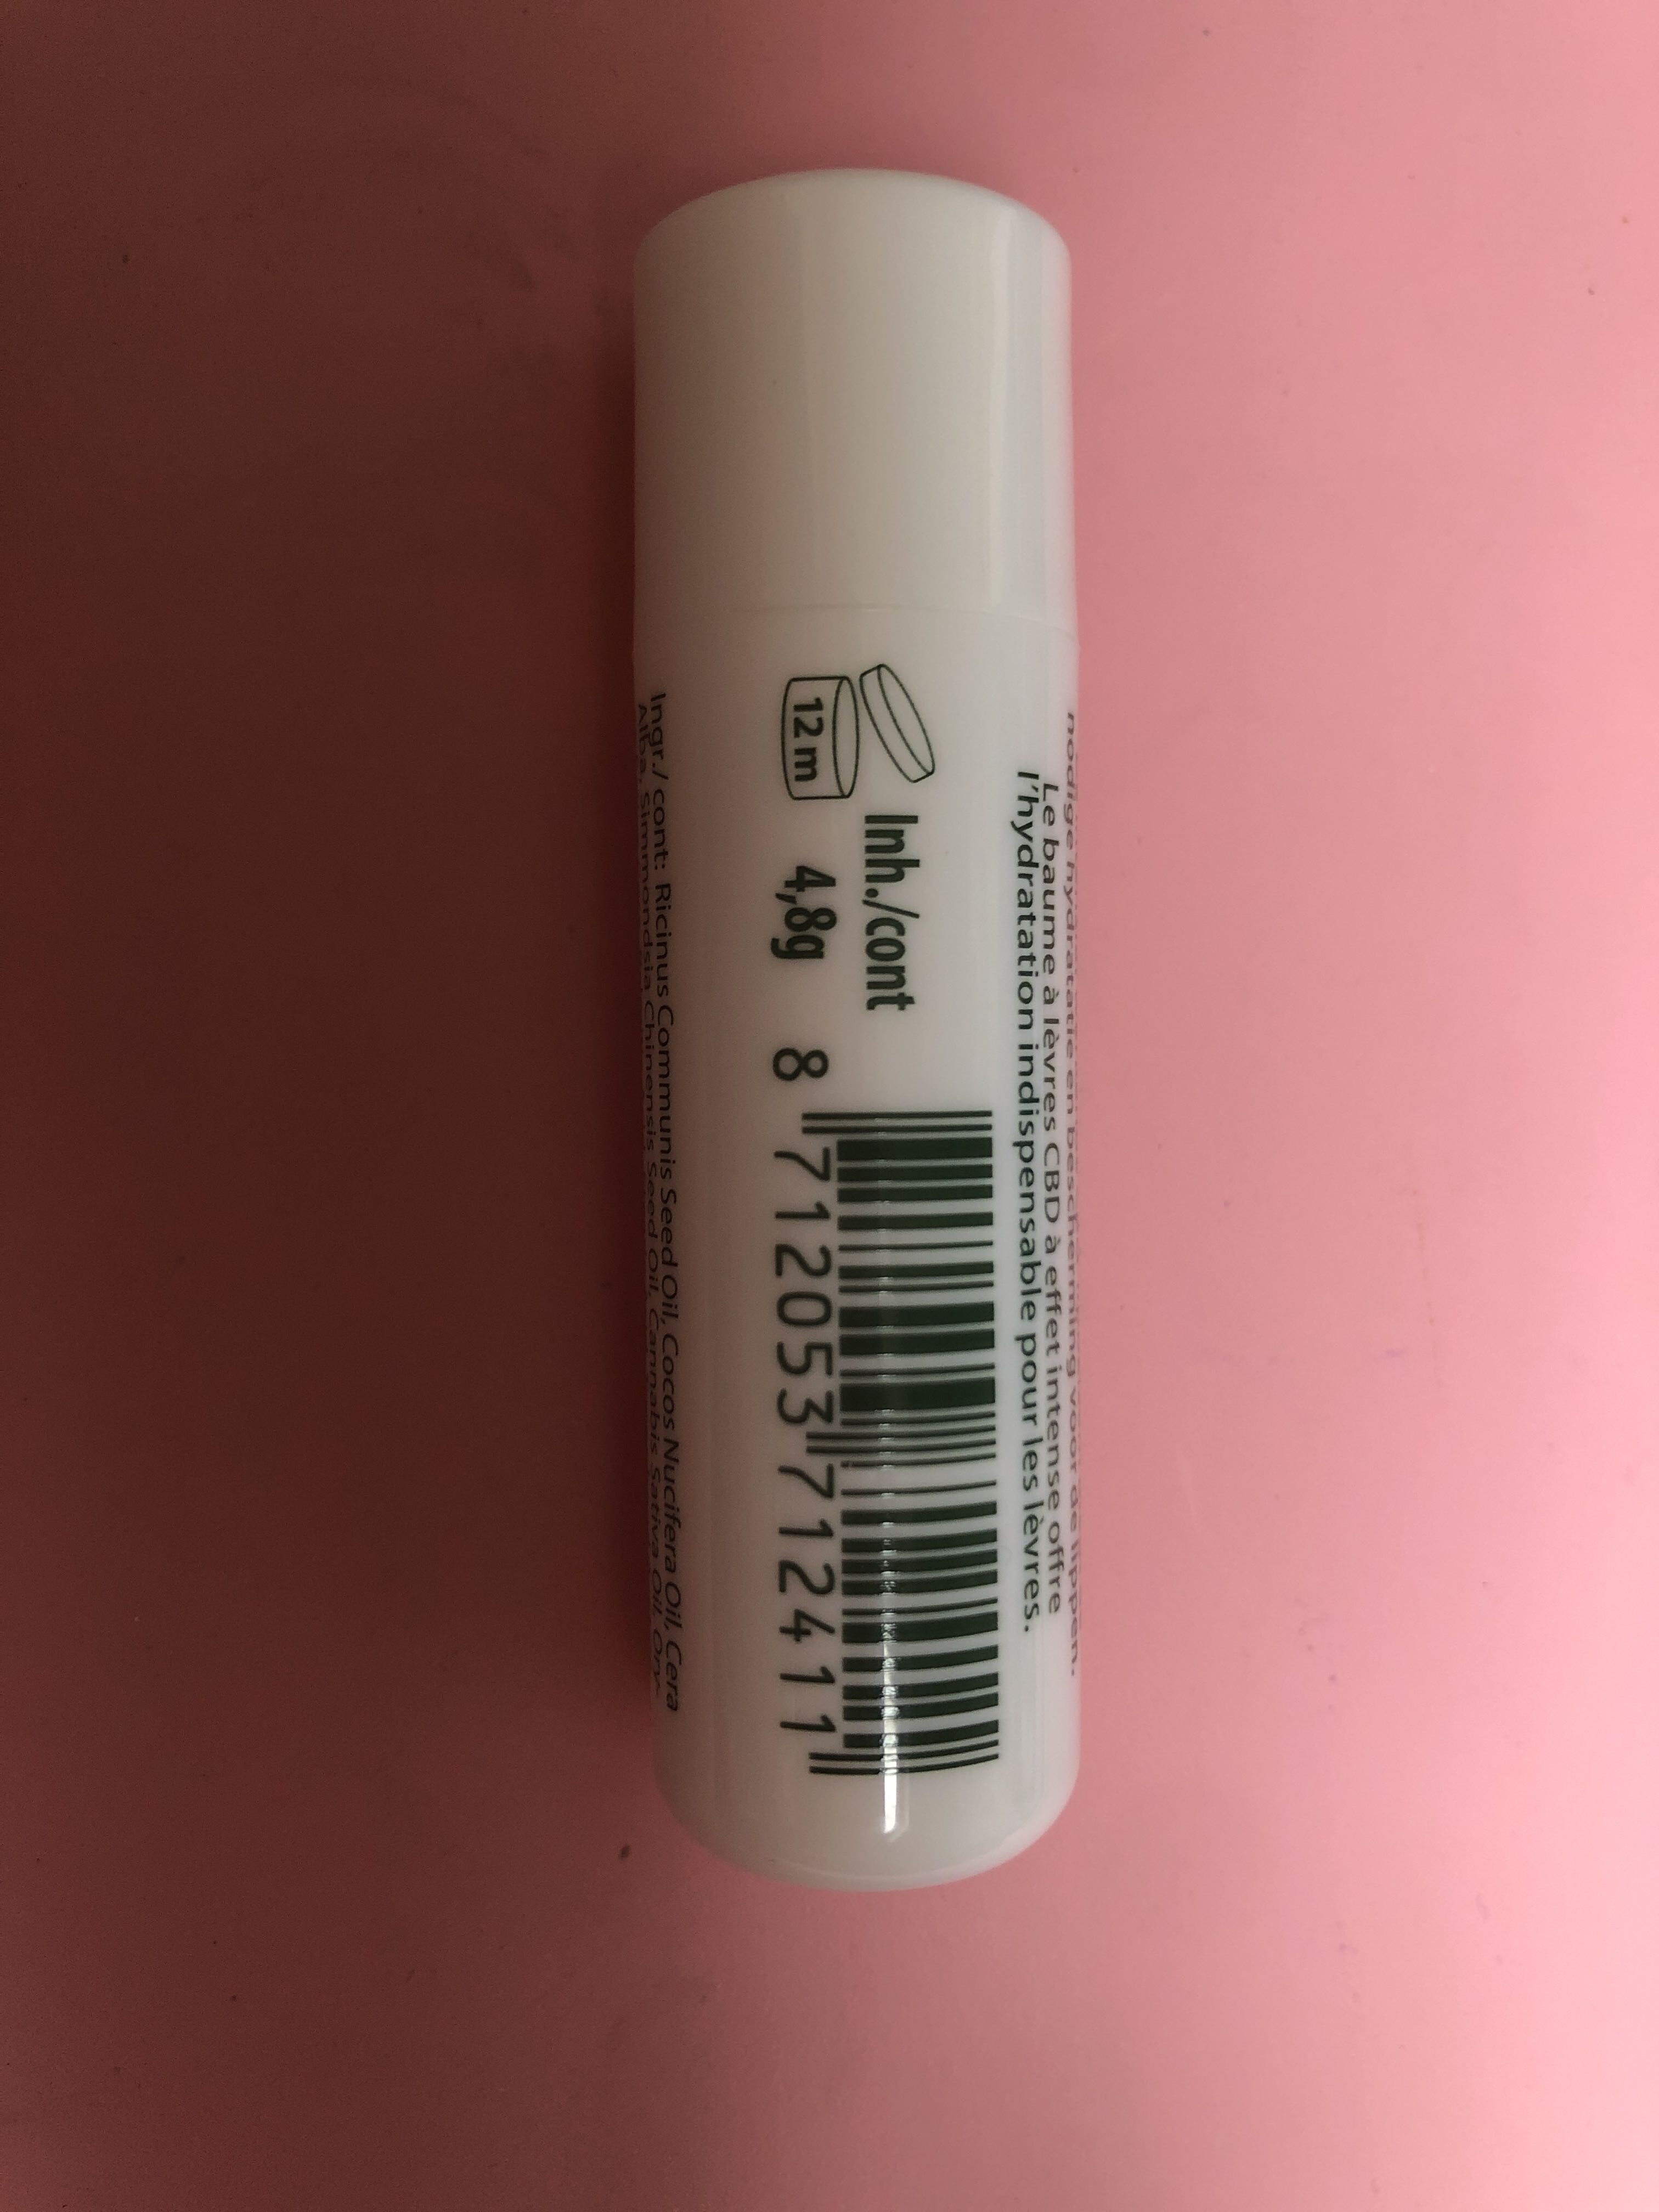 CBD lipbalsem / baume à lèvres - Produkt - en